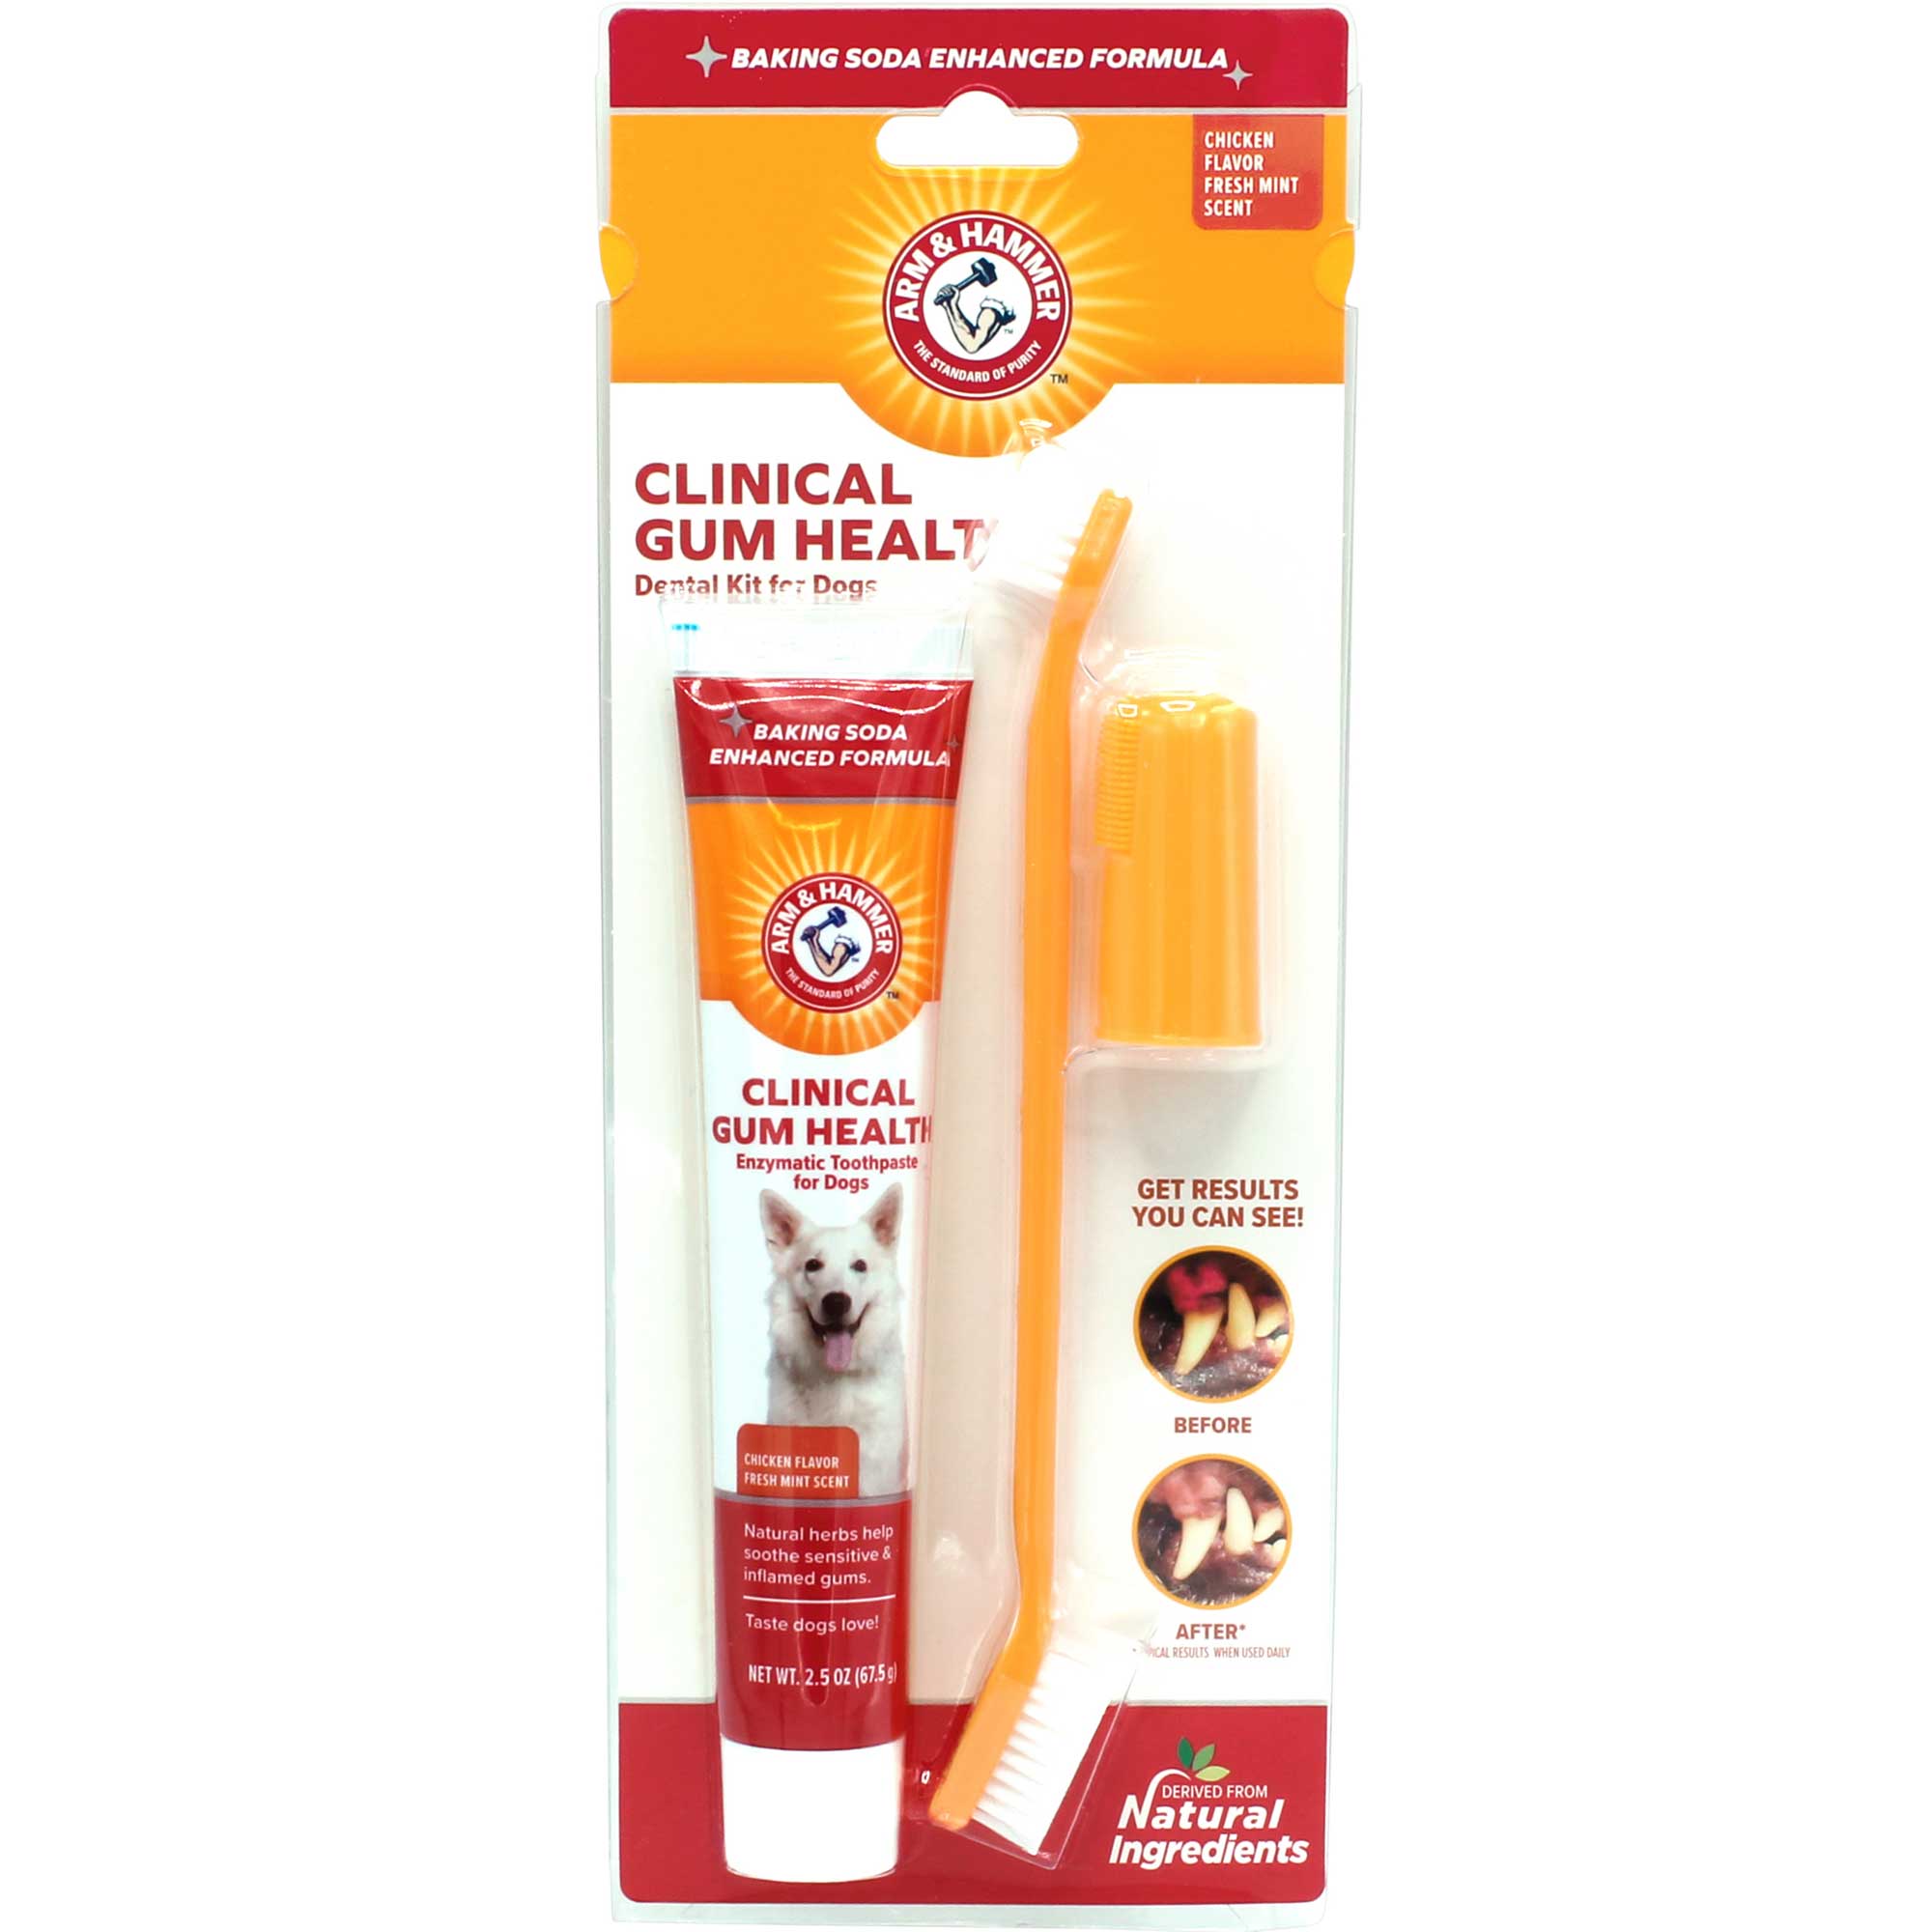 Arm & Hammer Clinical Gum Health Dental Kit Usage